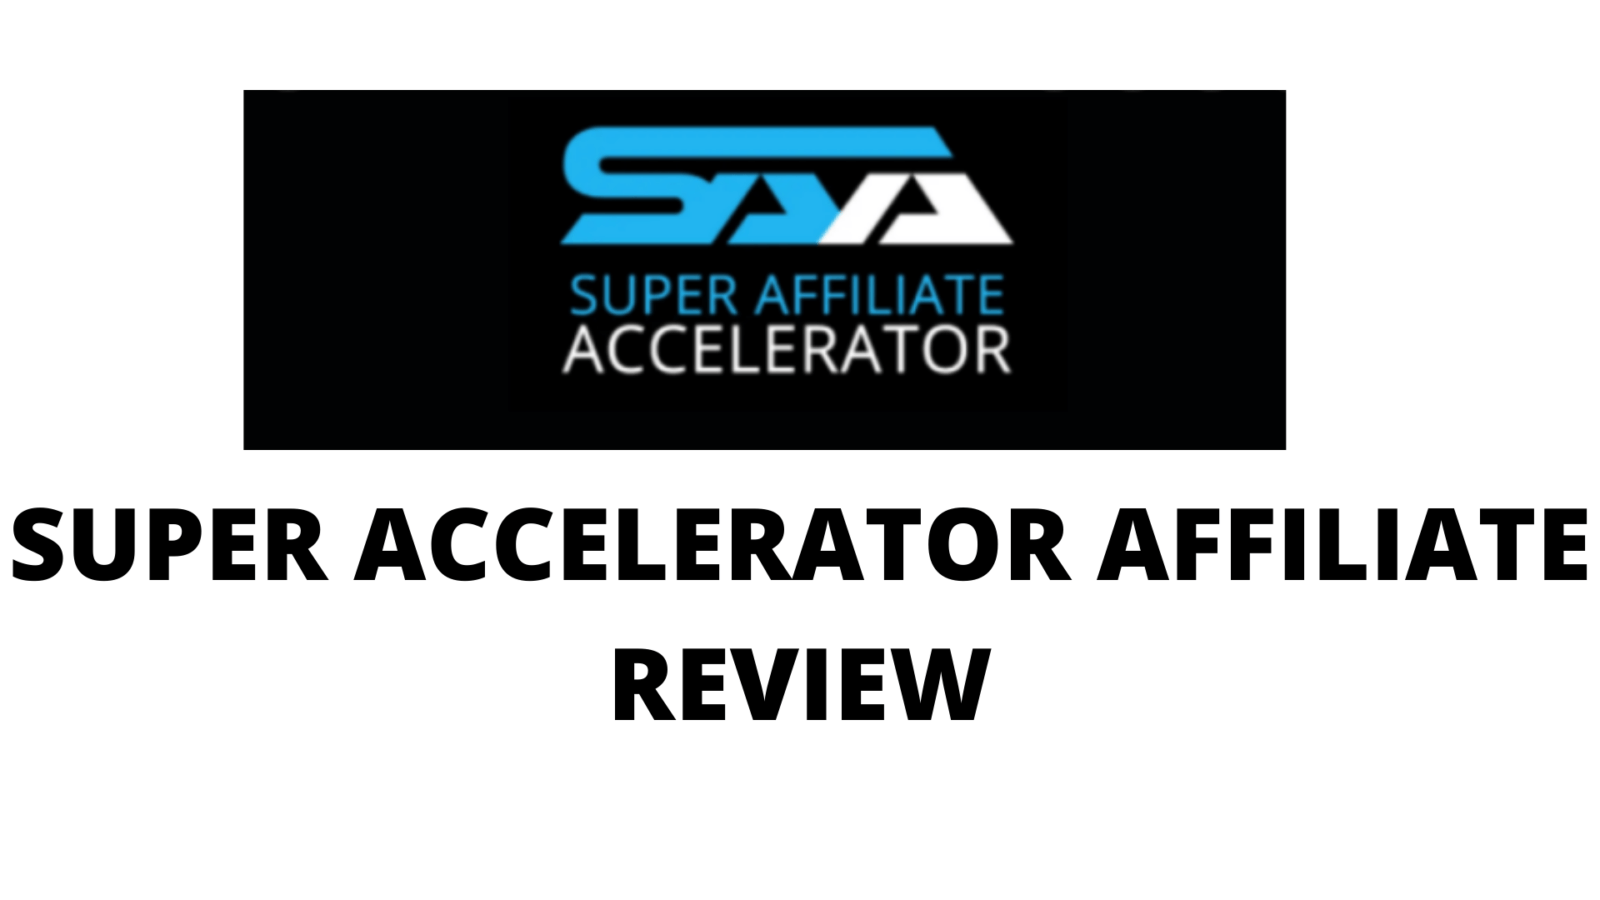 Super Affiliate Accelerator Review